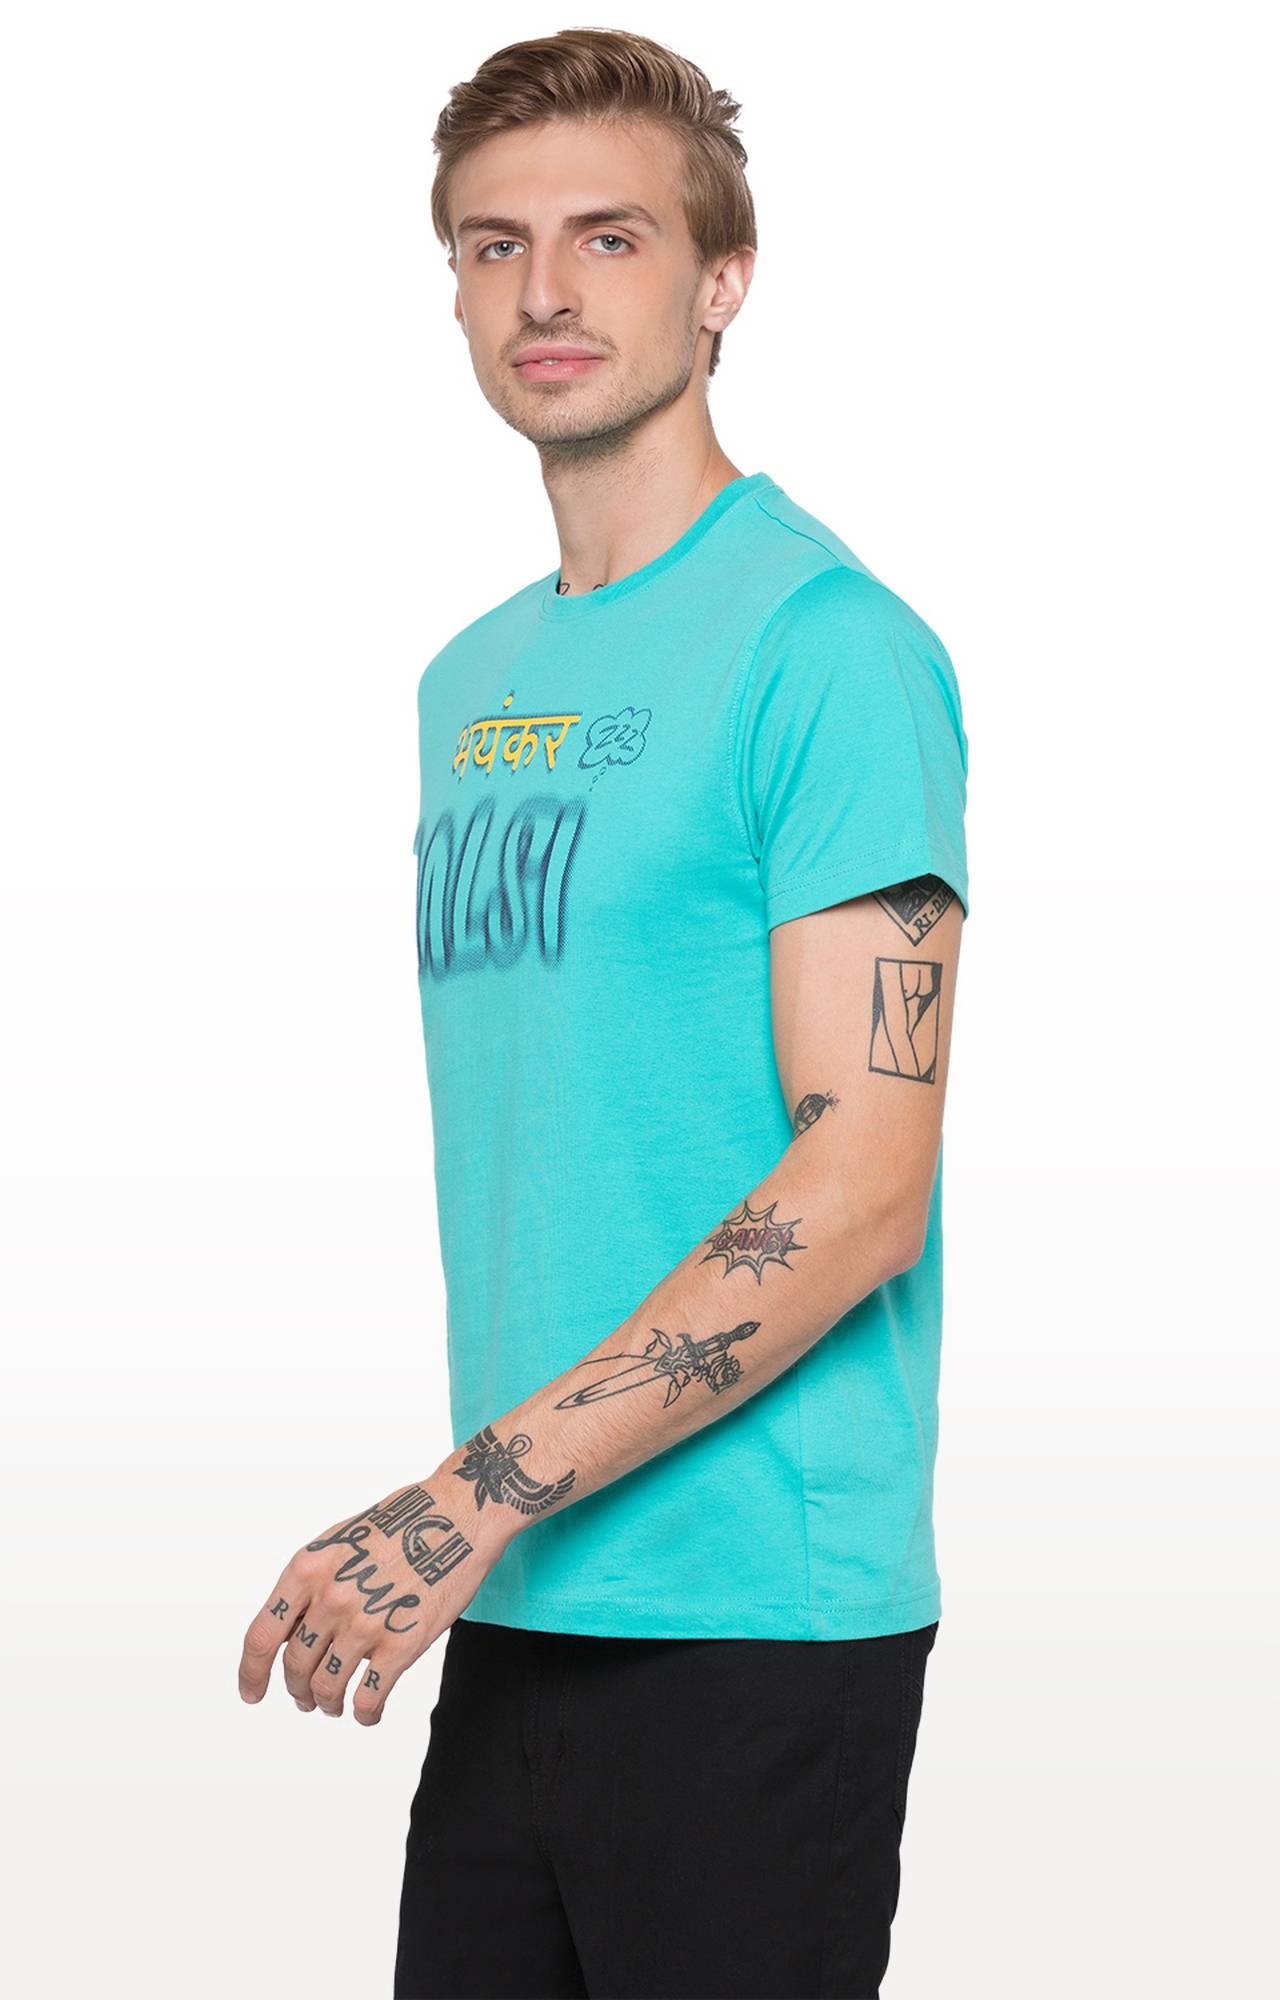 globus | Green Printed T-Shirt 2